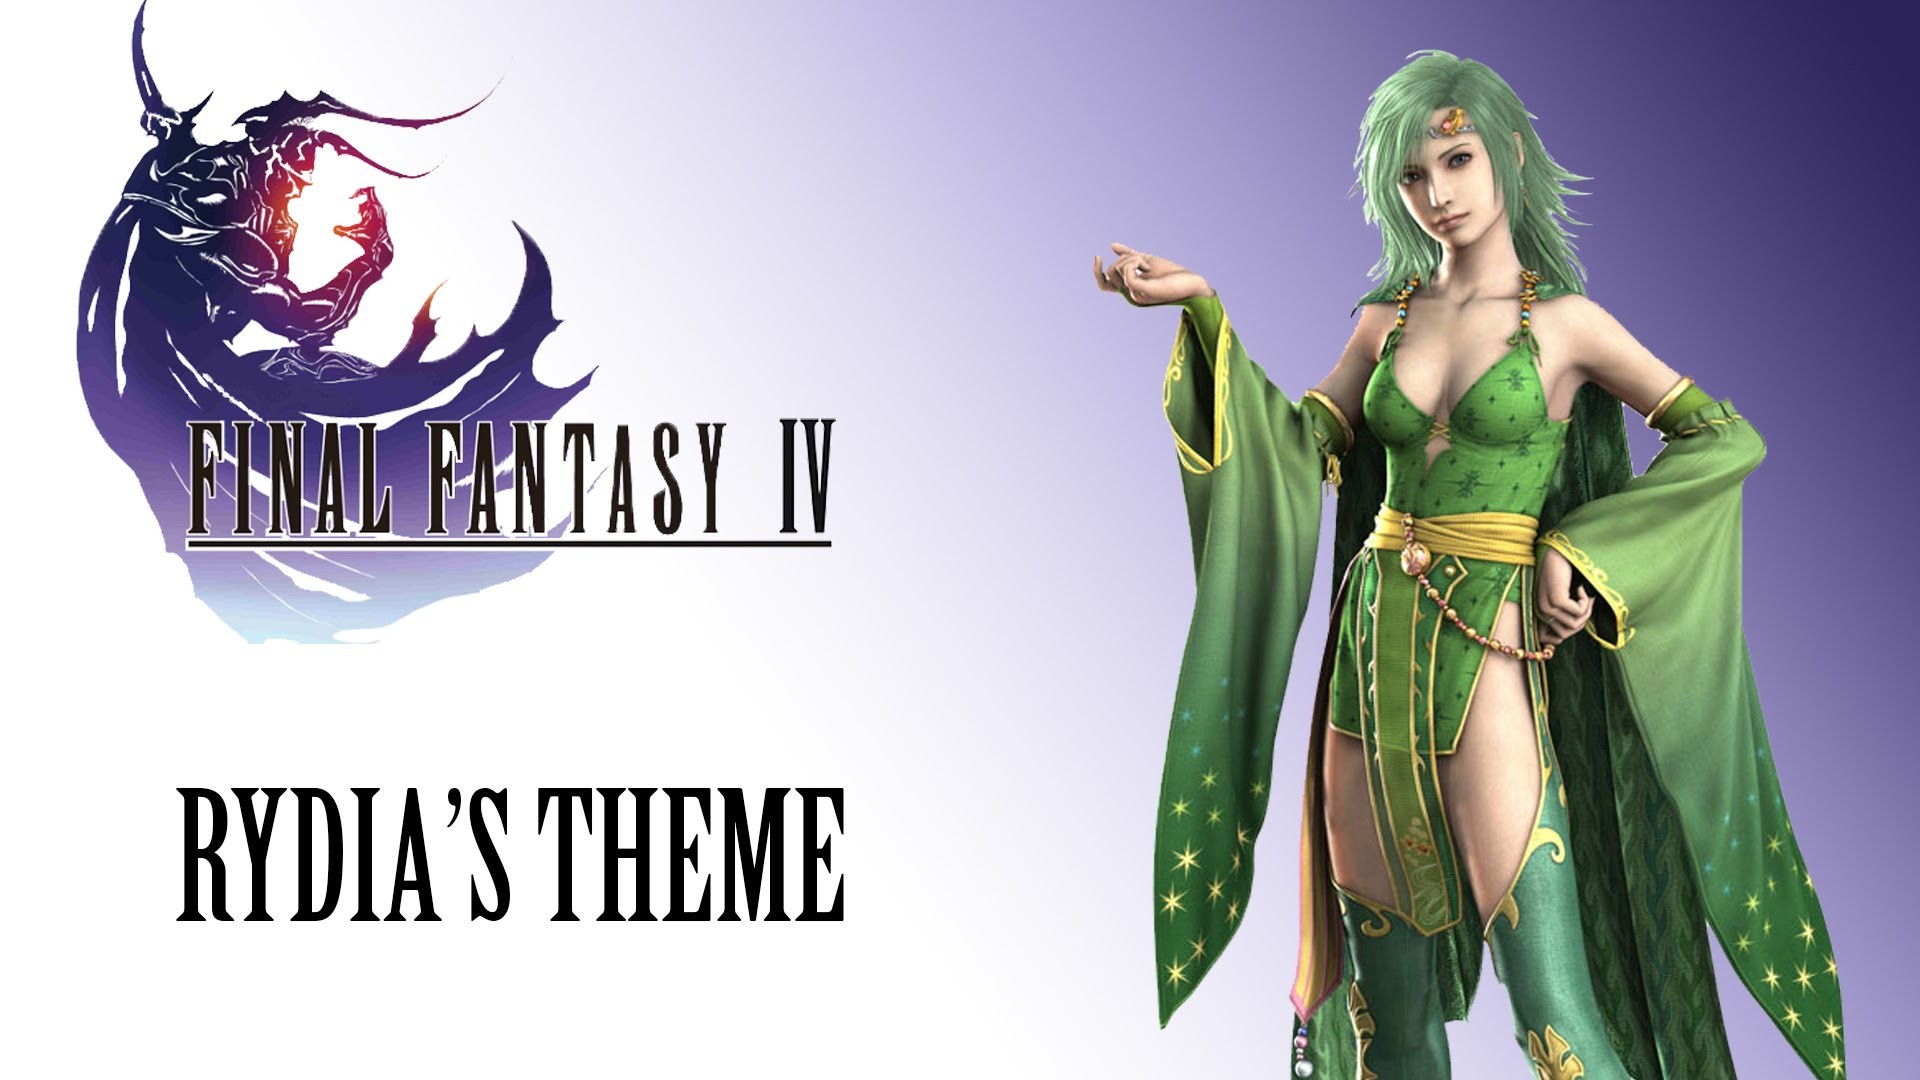 1920x1080 Final Fantasy IV OST Rydia 's Theme